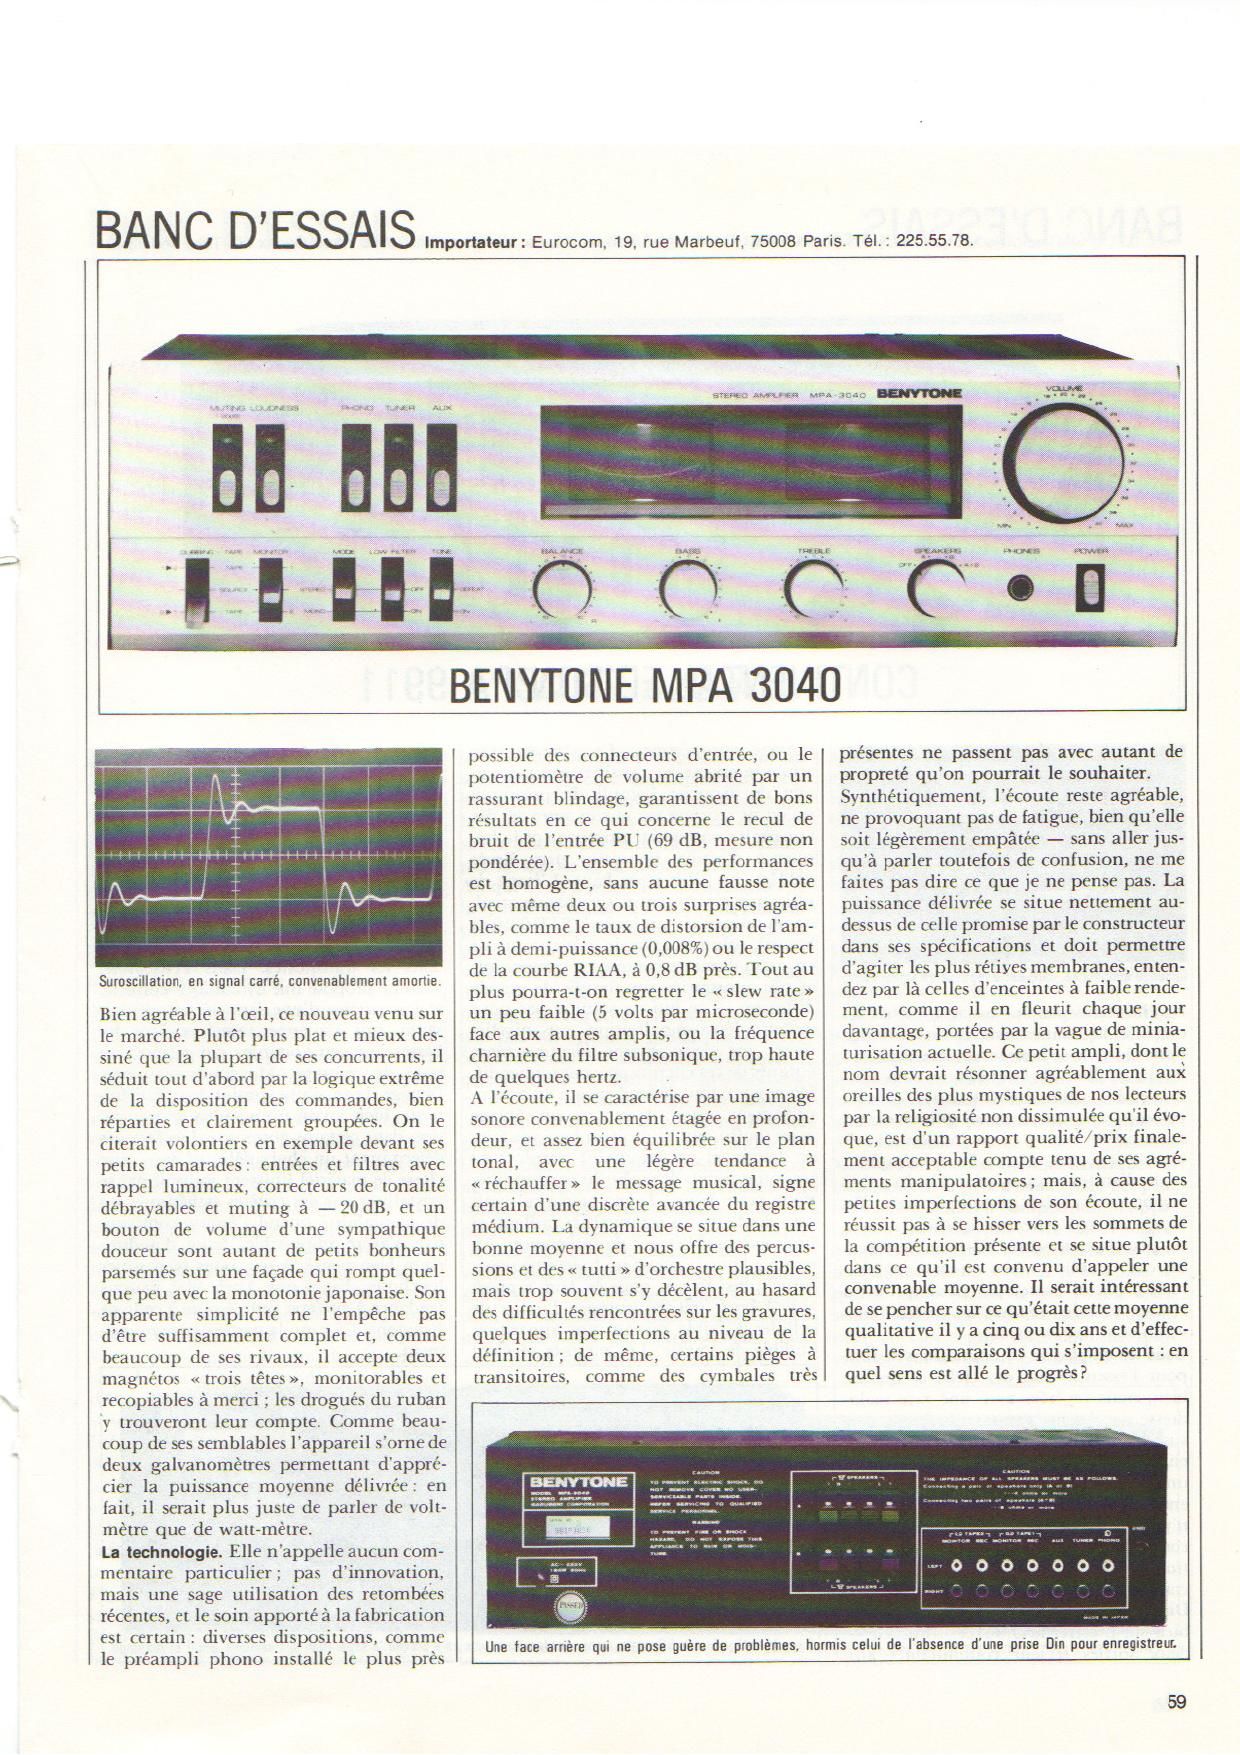 Benytone MPA 3040 Test